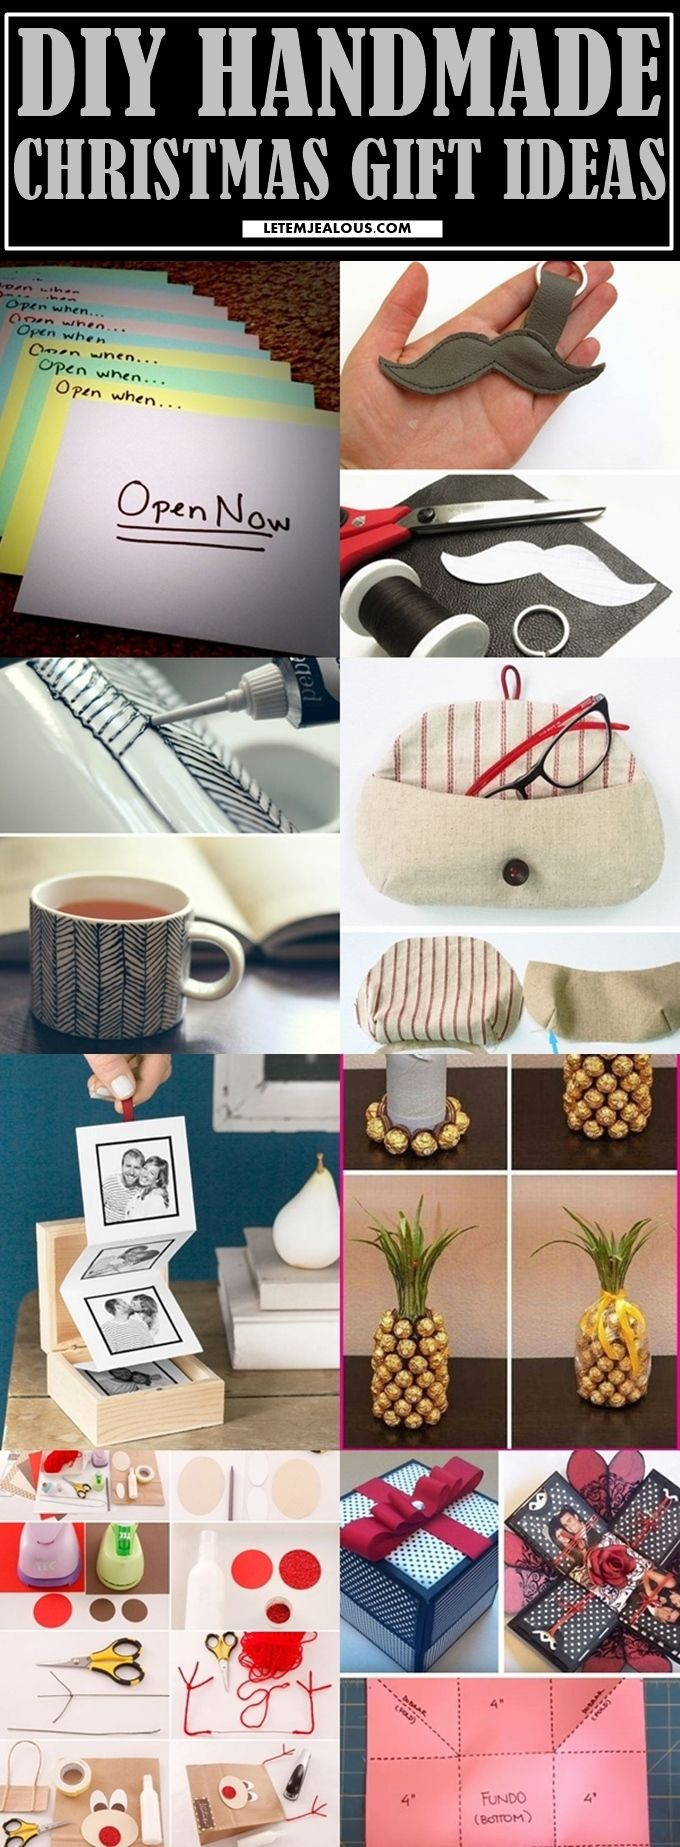 Homemade Gift Ideas For Boyfriend
 40 DIY Handmade Christmas Gift Ideas for your Boyfriend